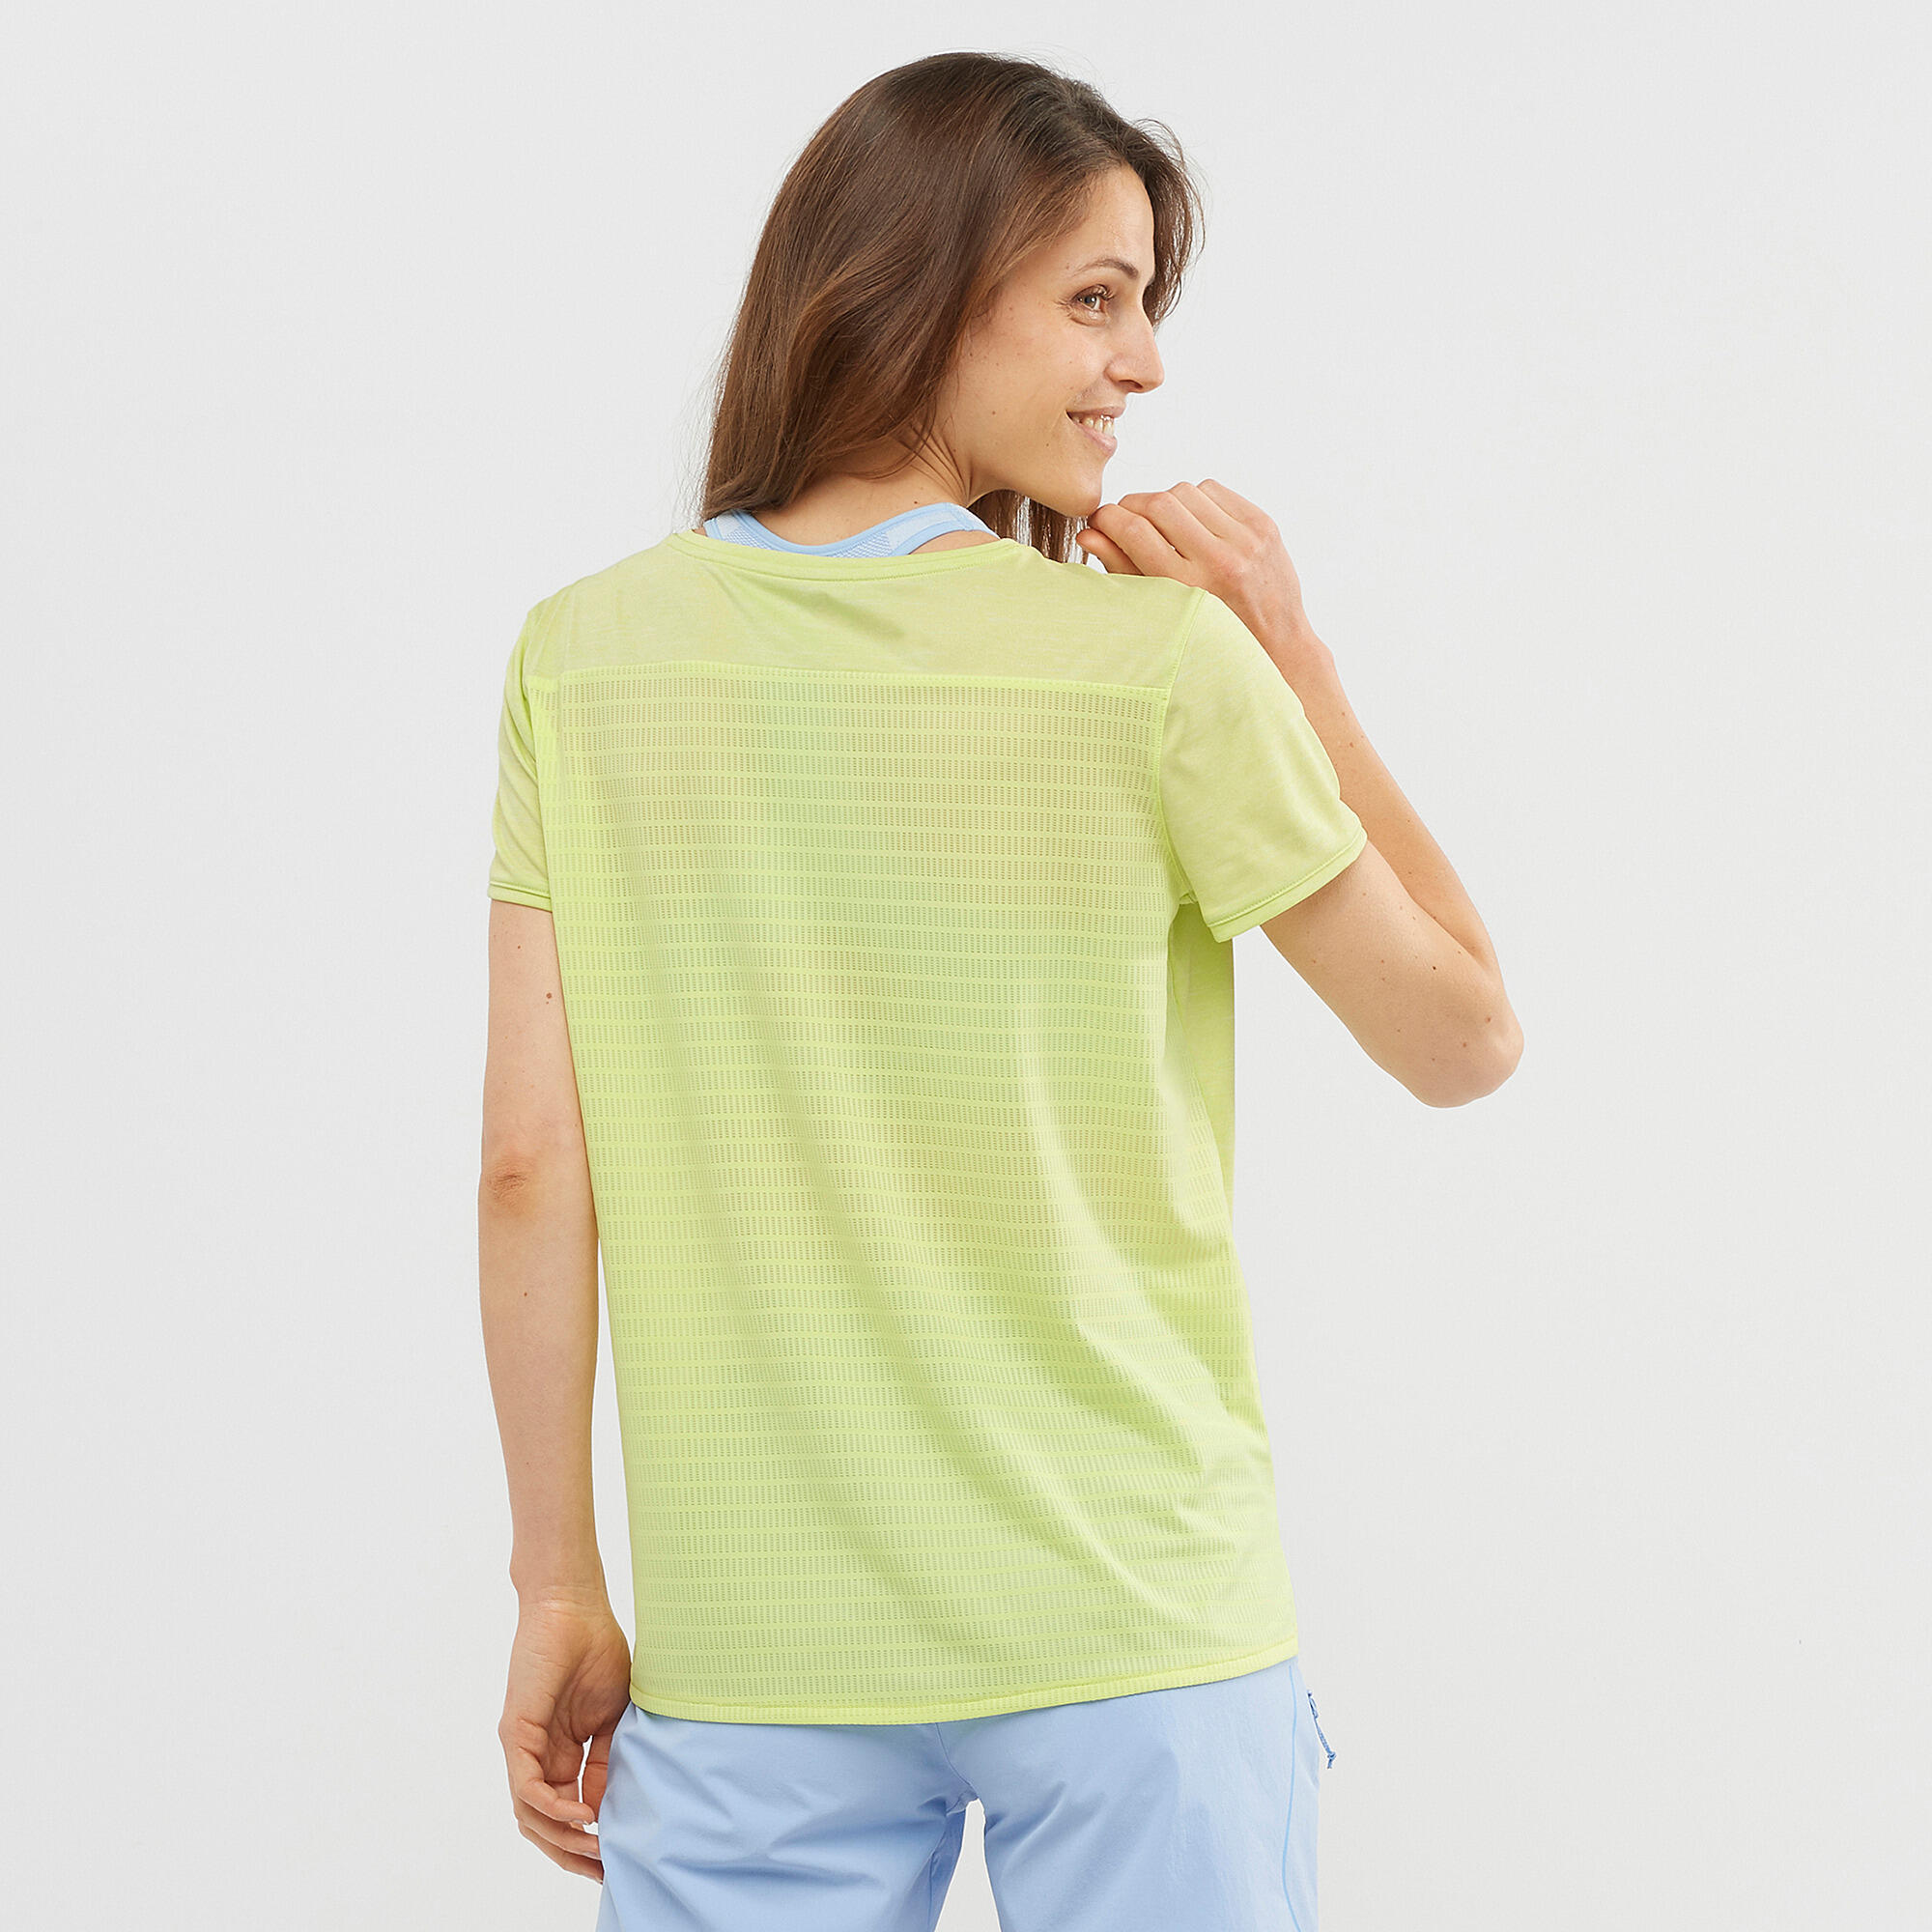 The women’s OUTLINE SUMMER t-shirt combines comfort, lightness and moisture transfer 3/4